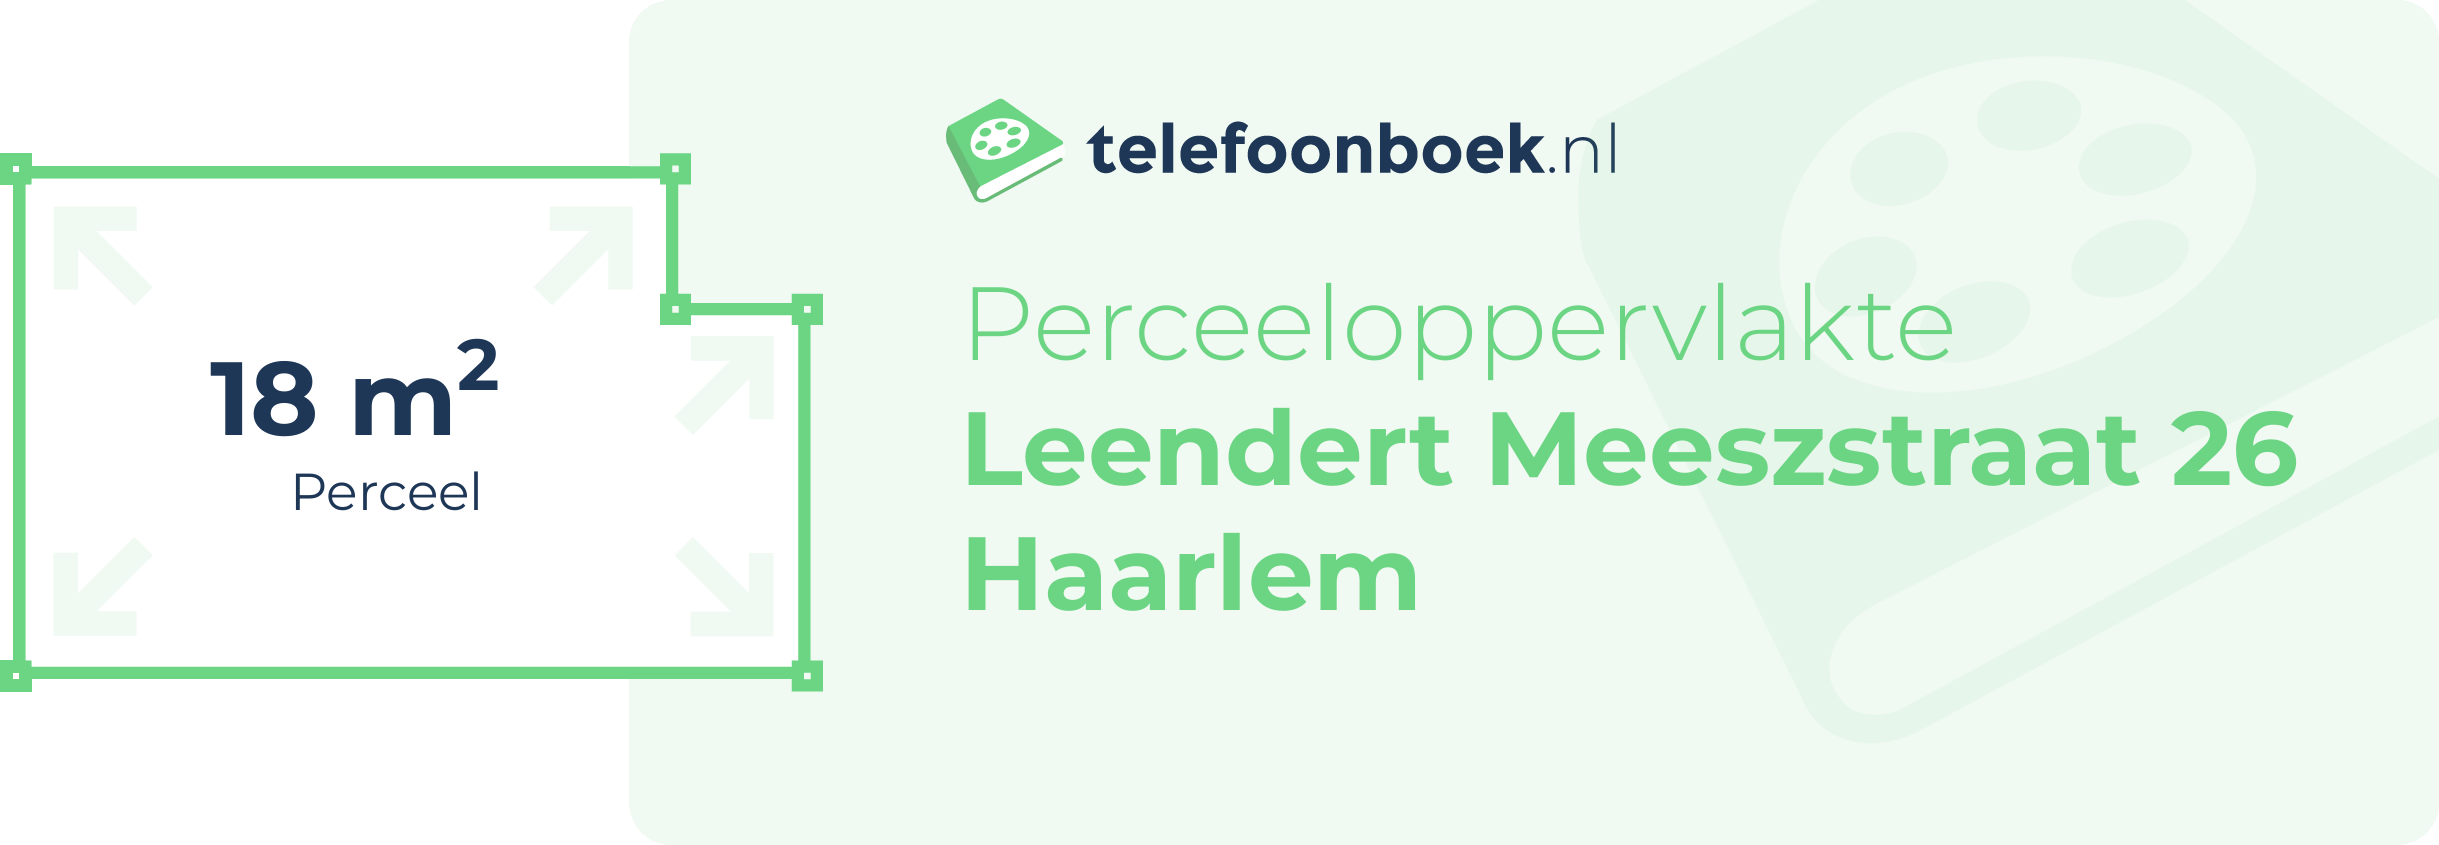 Perceeloppervlakte Leendert Meeszstraat 26 Haarlem